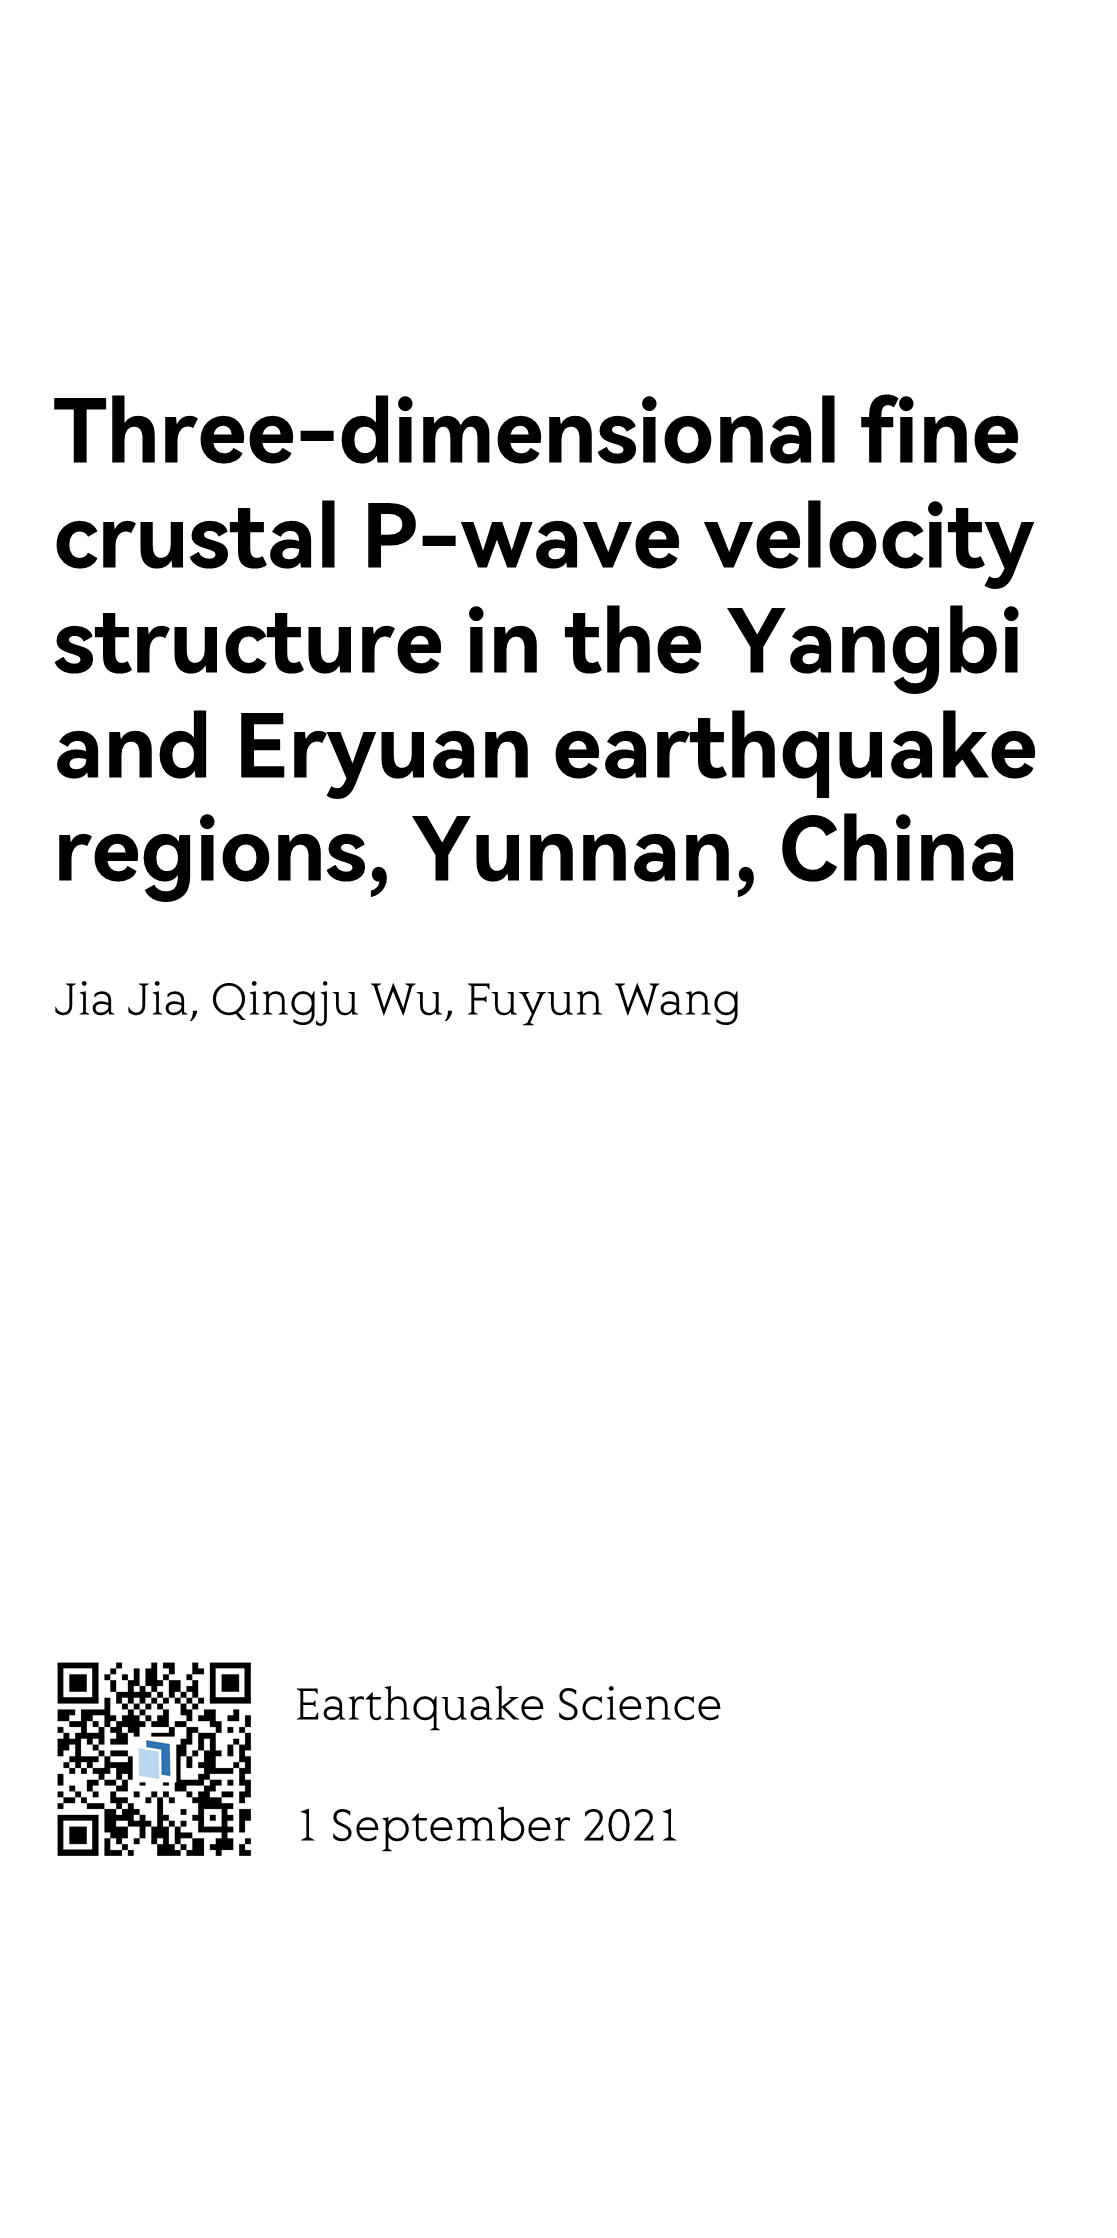 Three-dimensional fine crustal P-wave velocity structure in the Yangbi and Eryuan earthquake regions, Yunnan, China_1